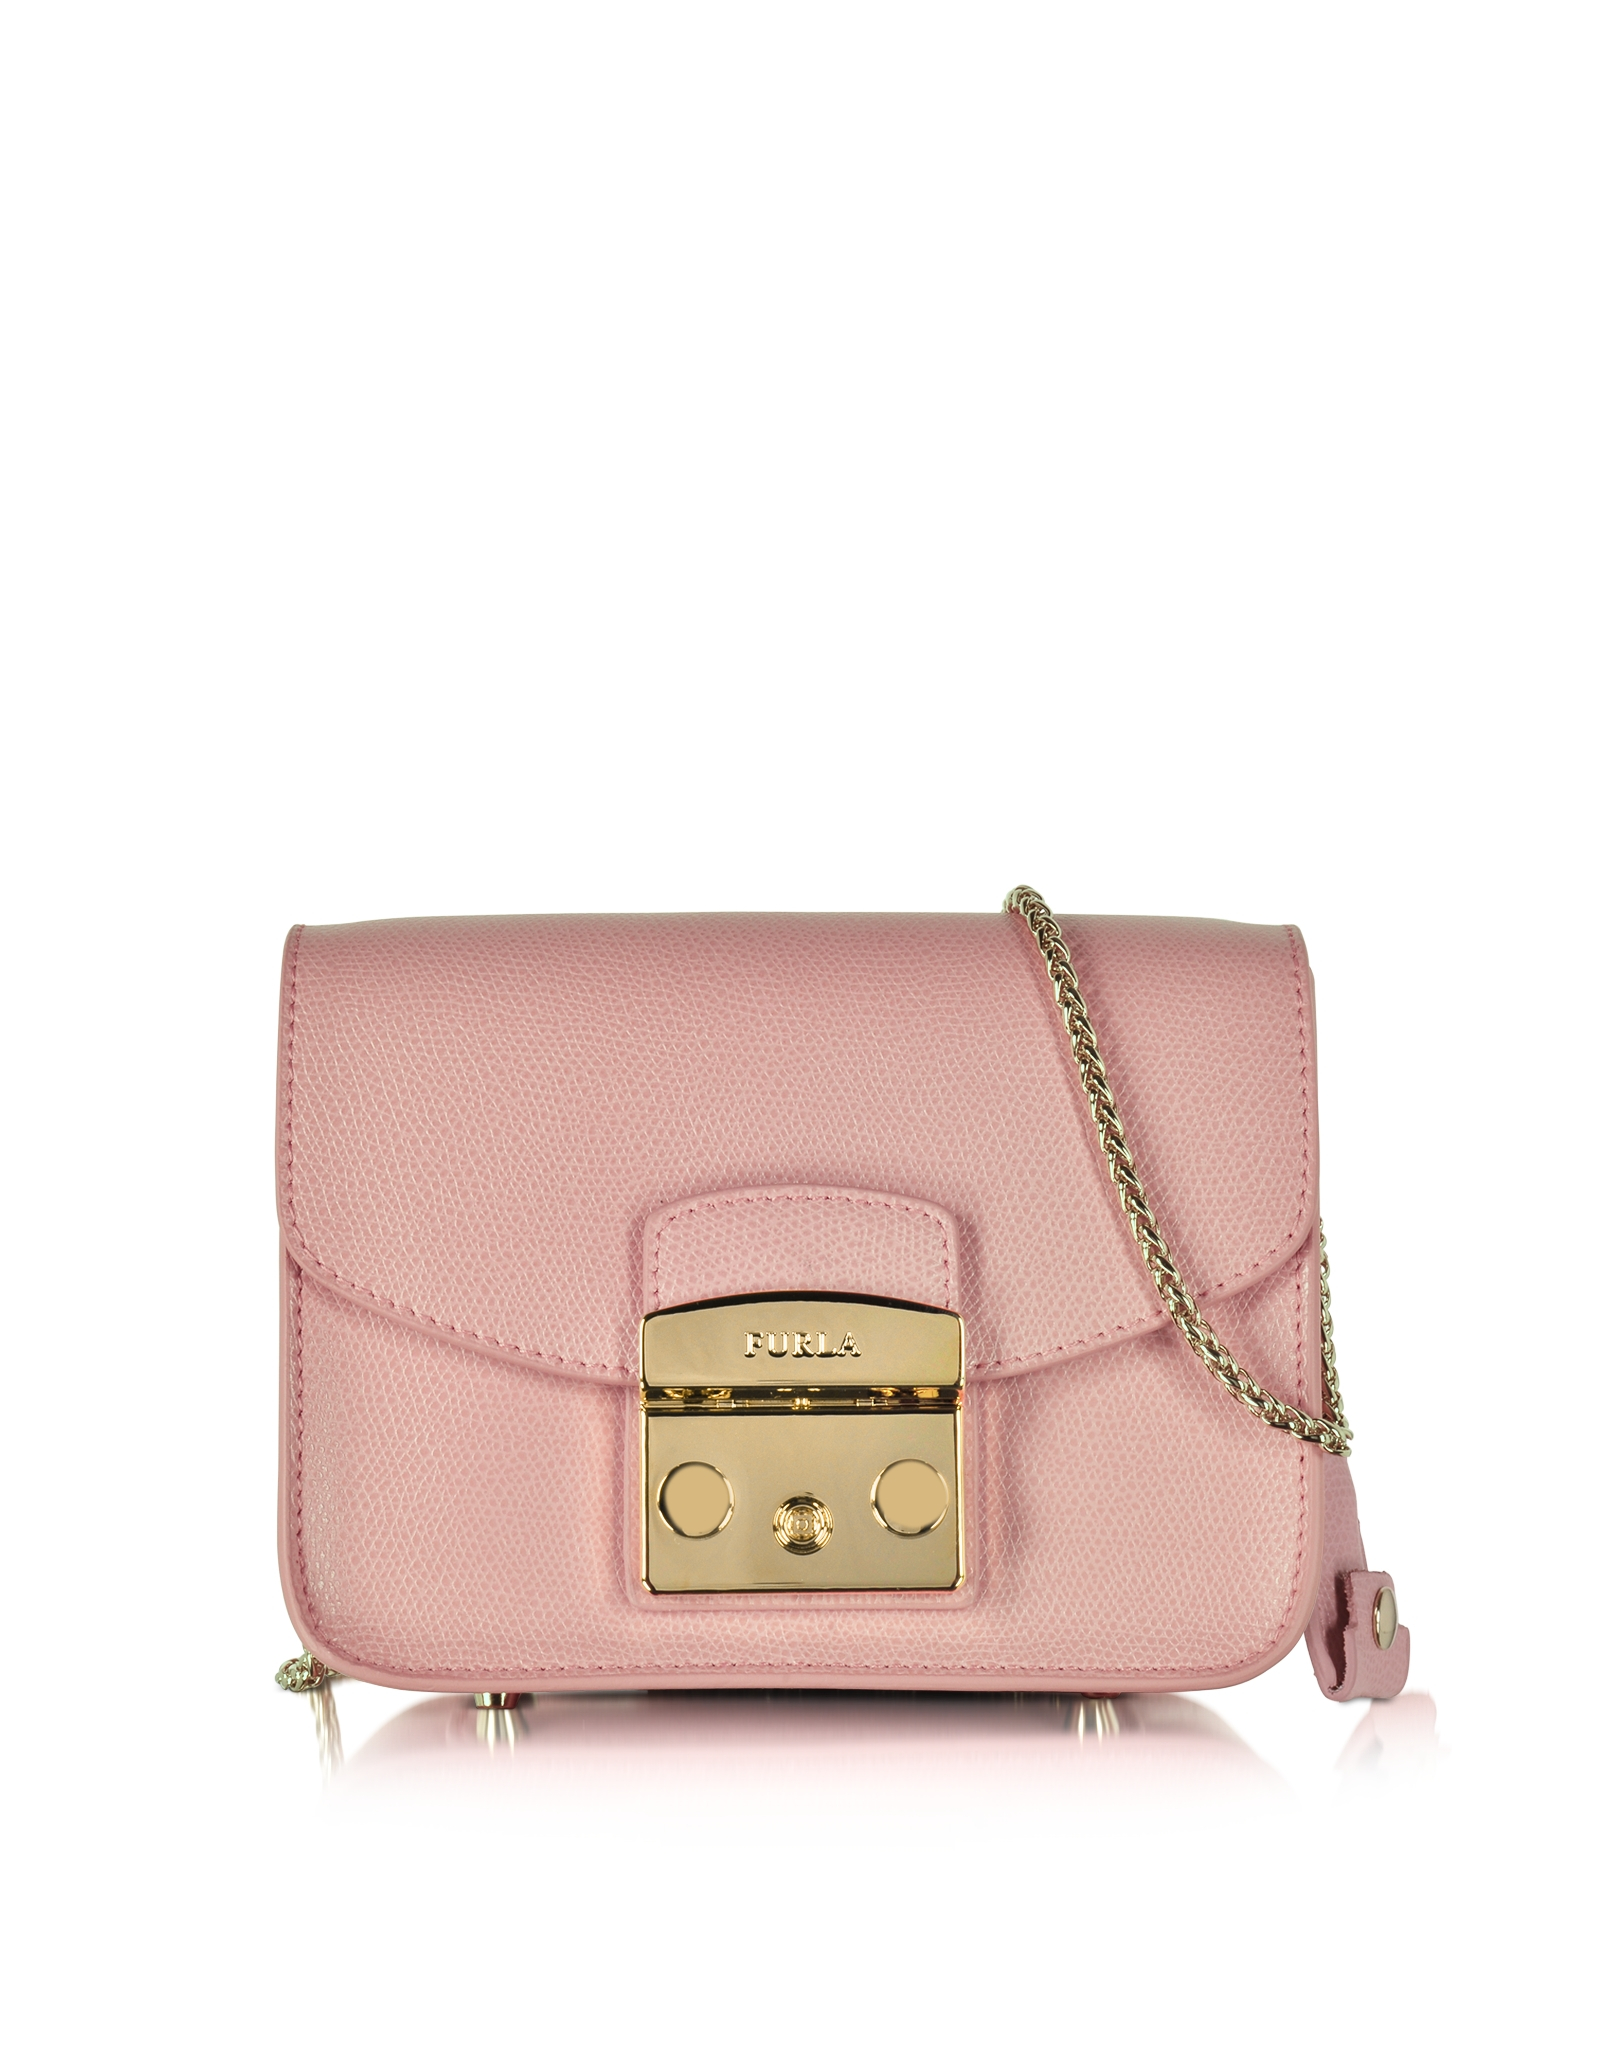 Furla Metropolis Moonstone Leather Mini Crossbody Bag in Pink (gold) | Lyst